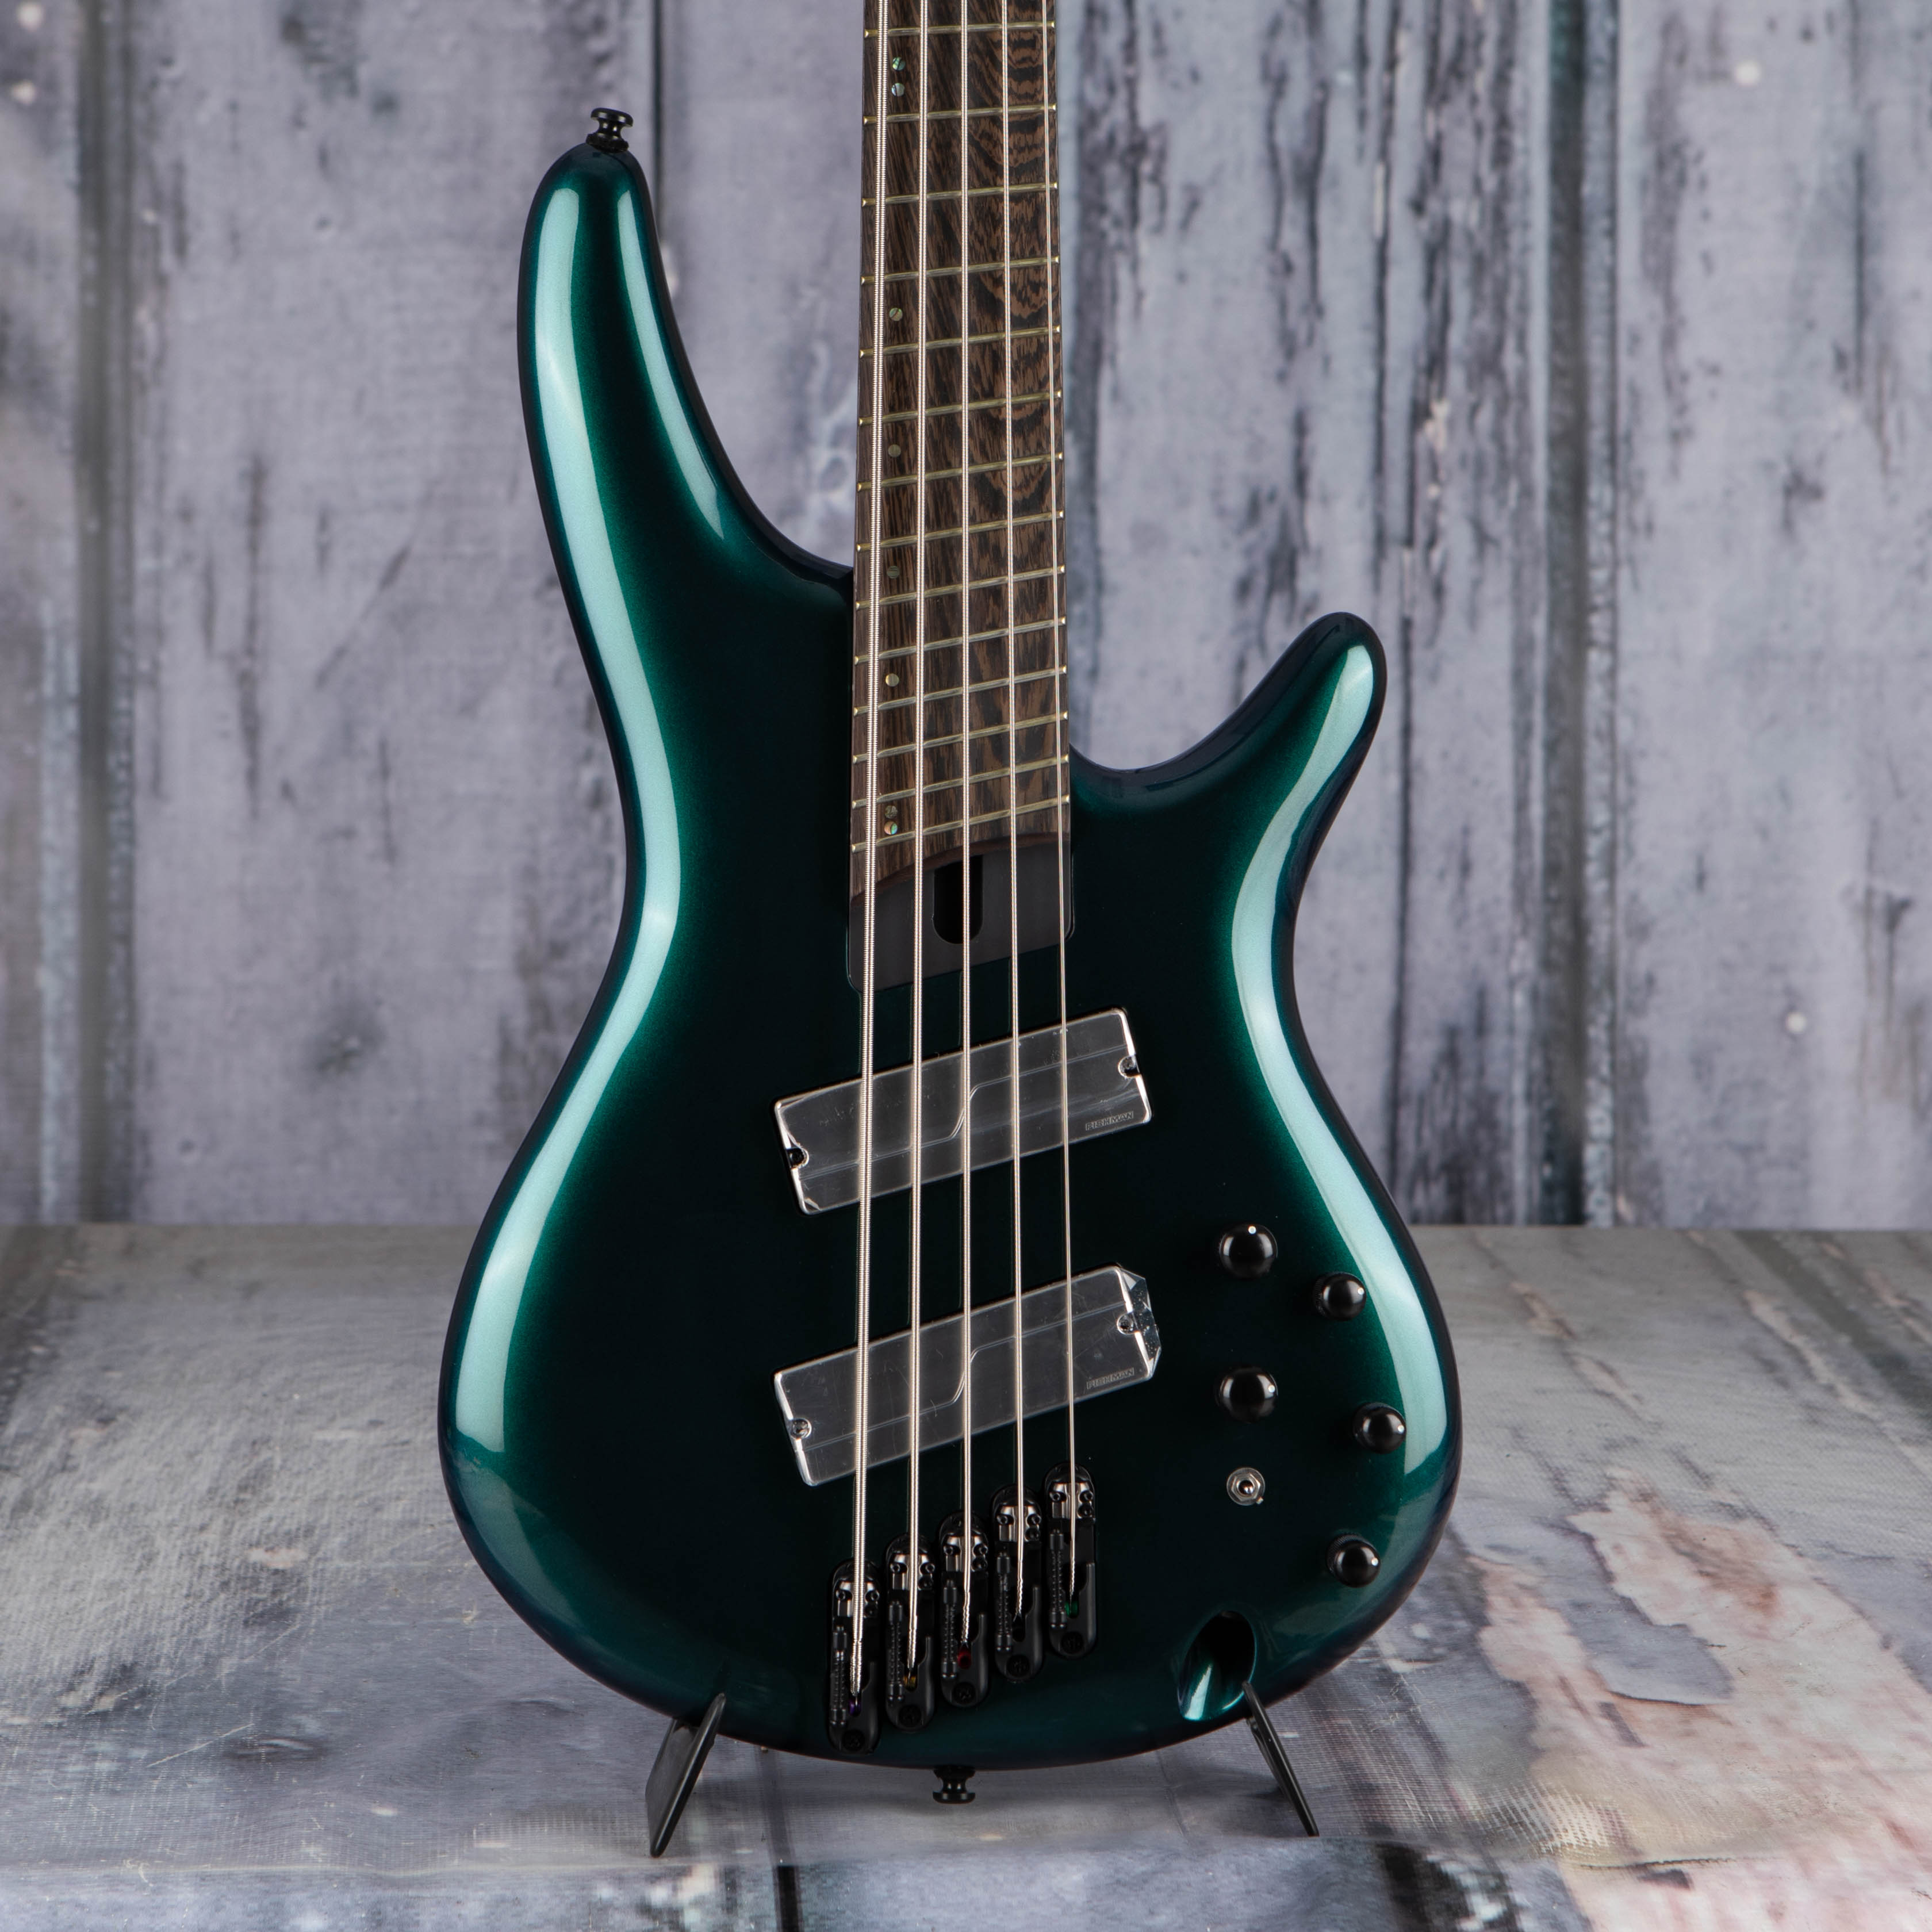 Ibanez Bass Workshop SRMS725 5-String Electric Bass Guitar, Blue Chameleon, front